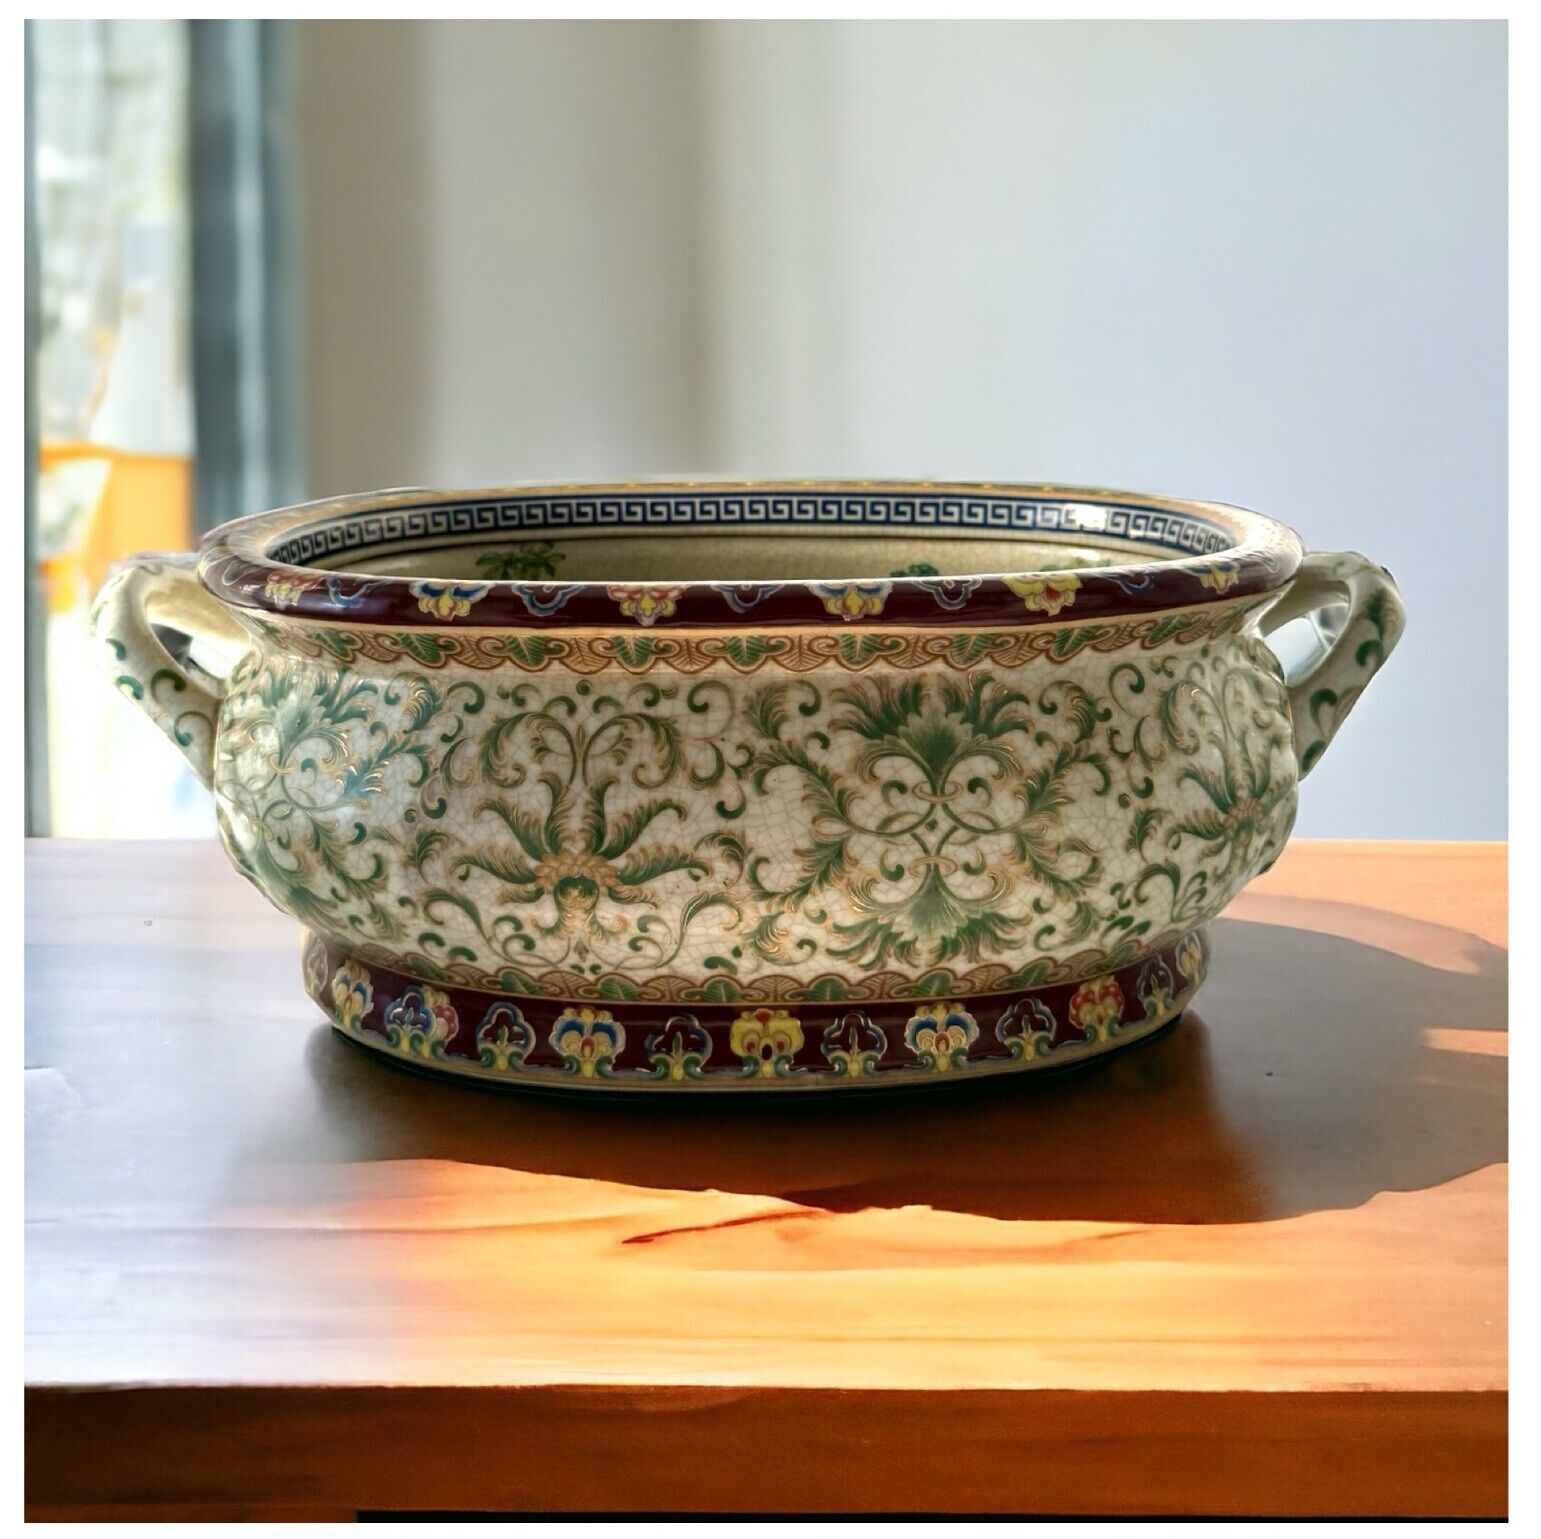 VTG Bombay Company 19.5” Chinoiserie Chinese Porcelain Koi Fish Oval Bowl Bath